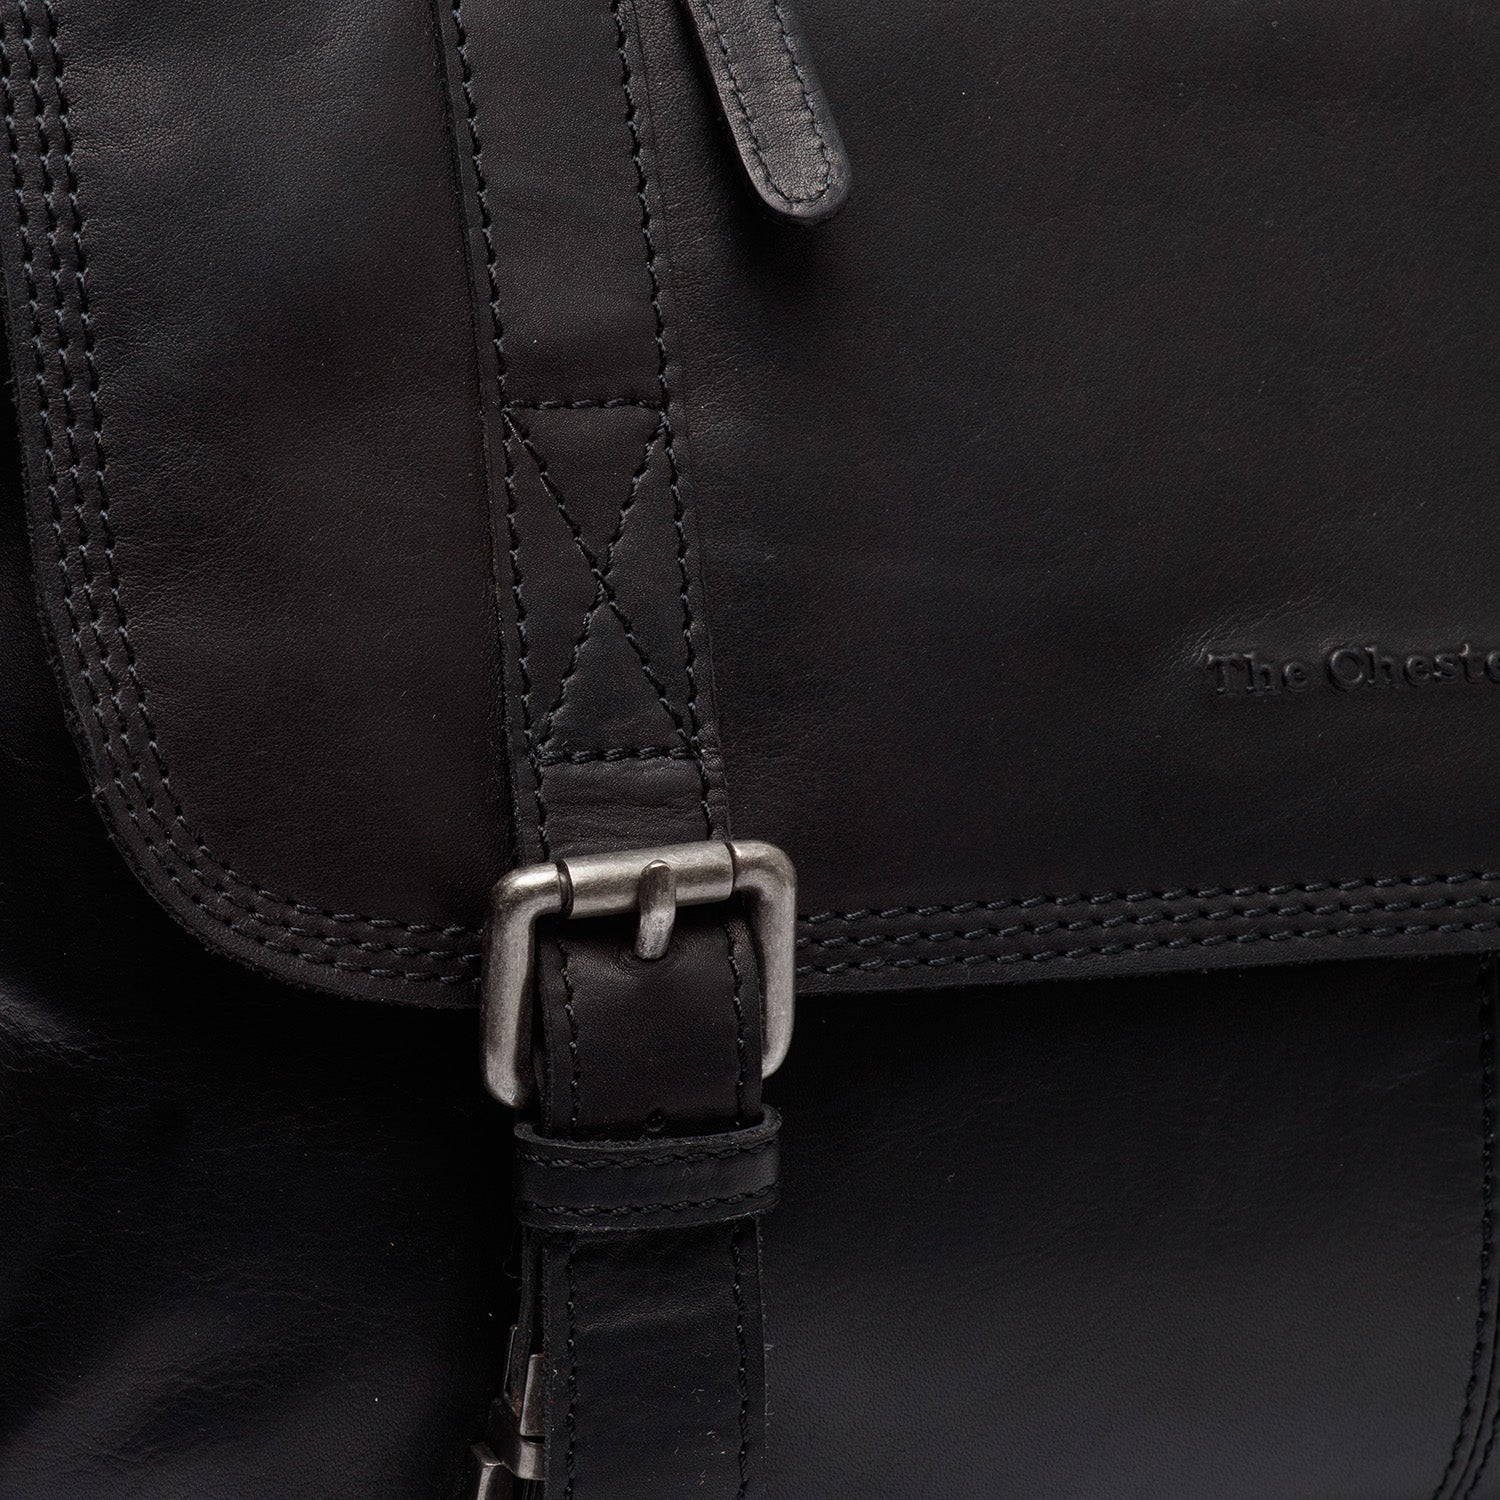 Leather Laptop Bag - The Chesterfield Brand Veneto Black